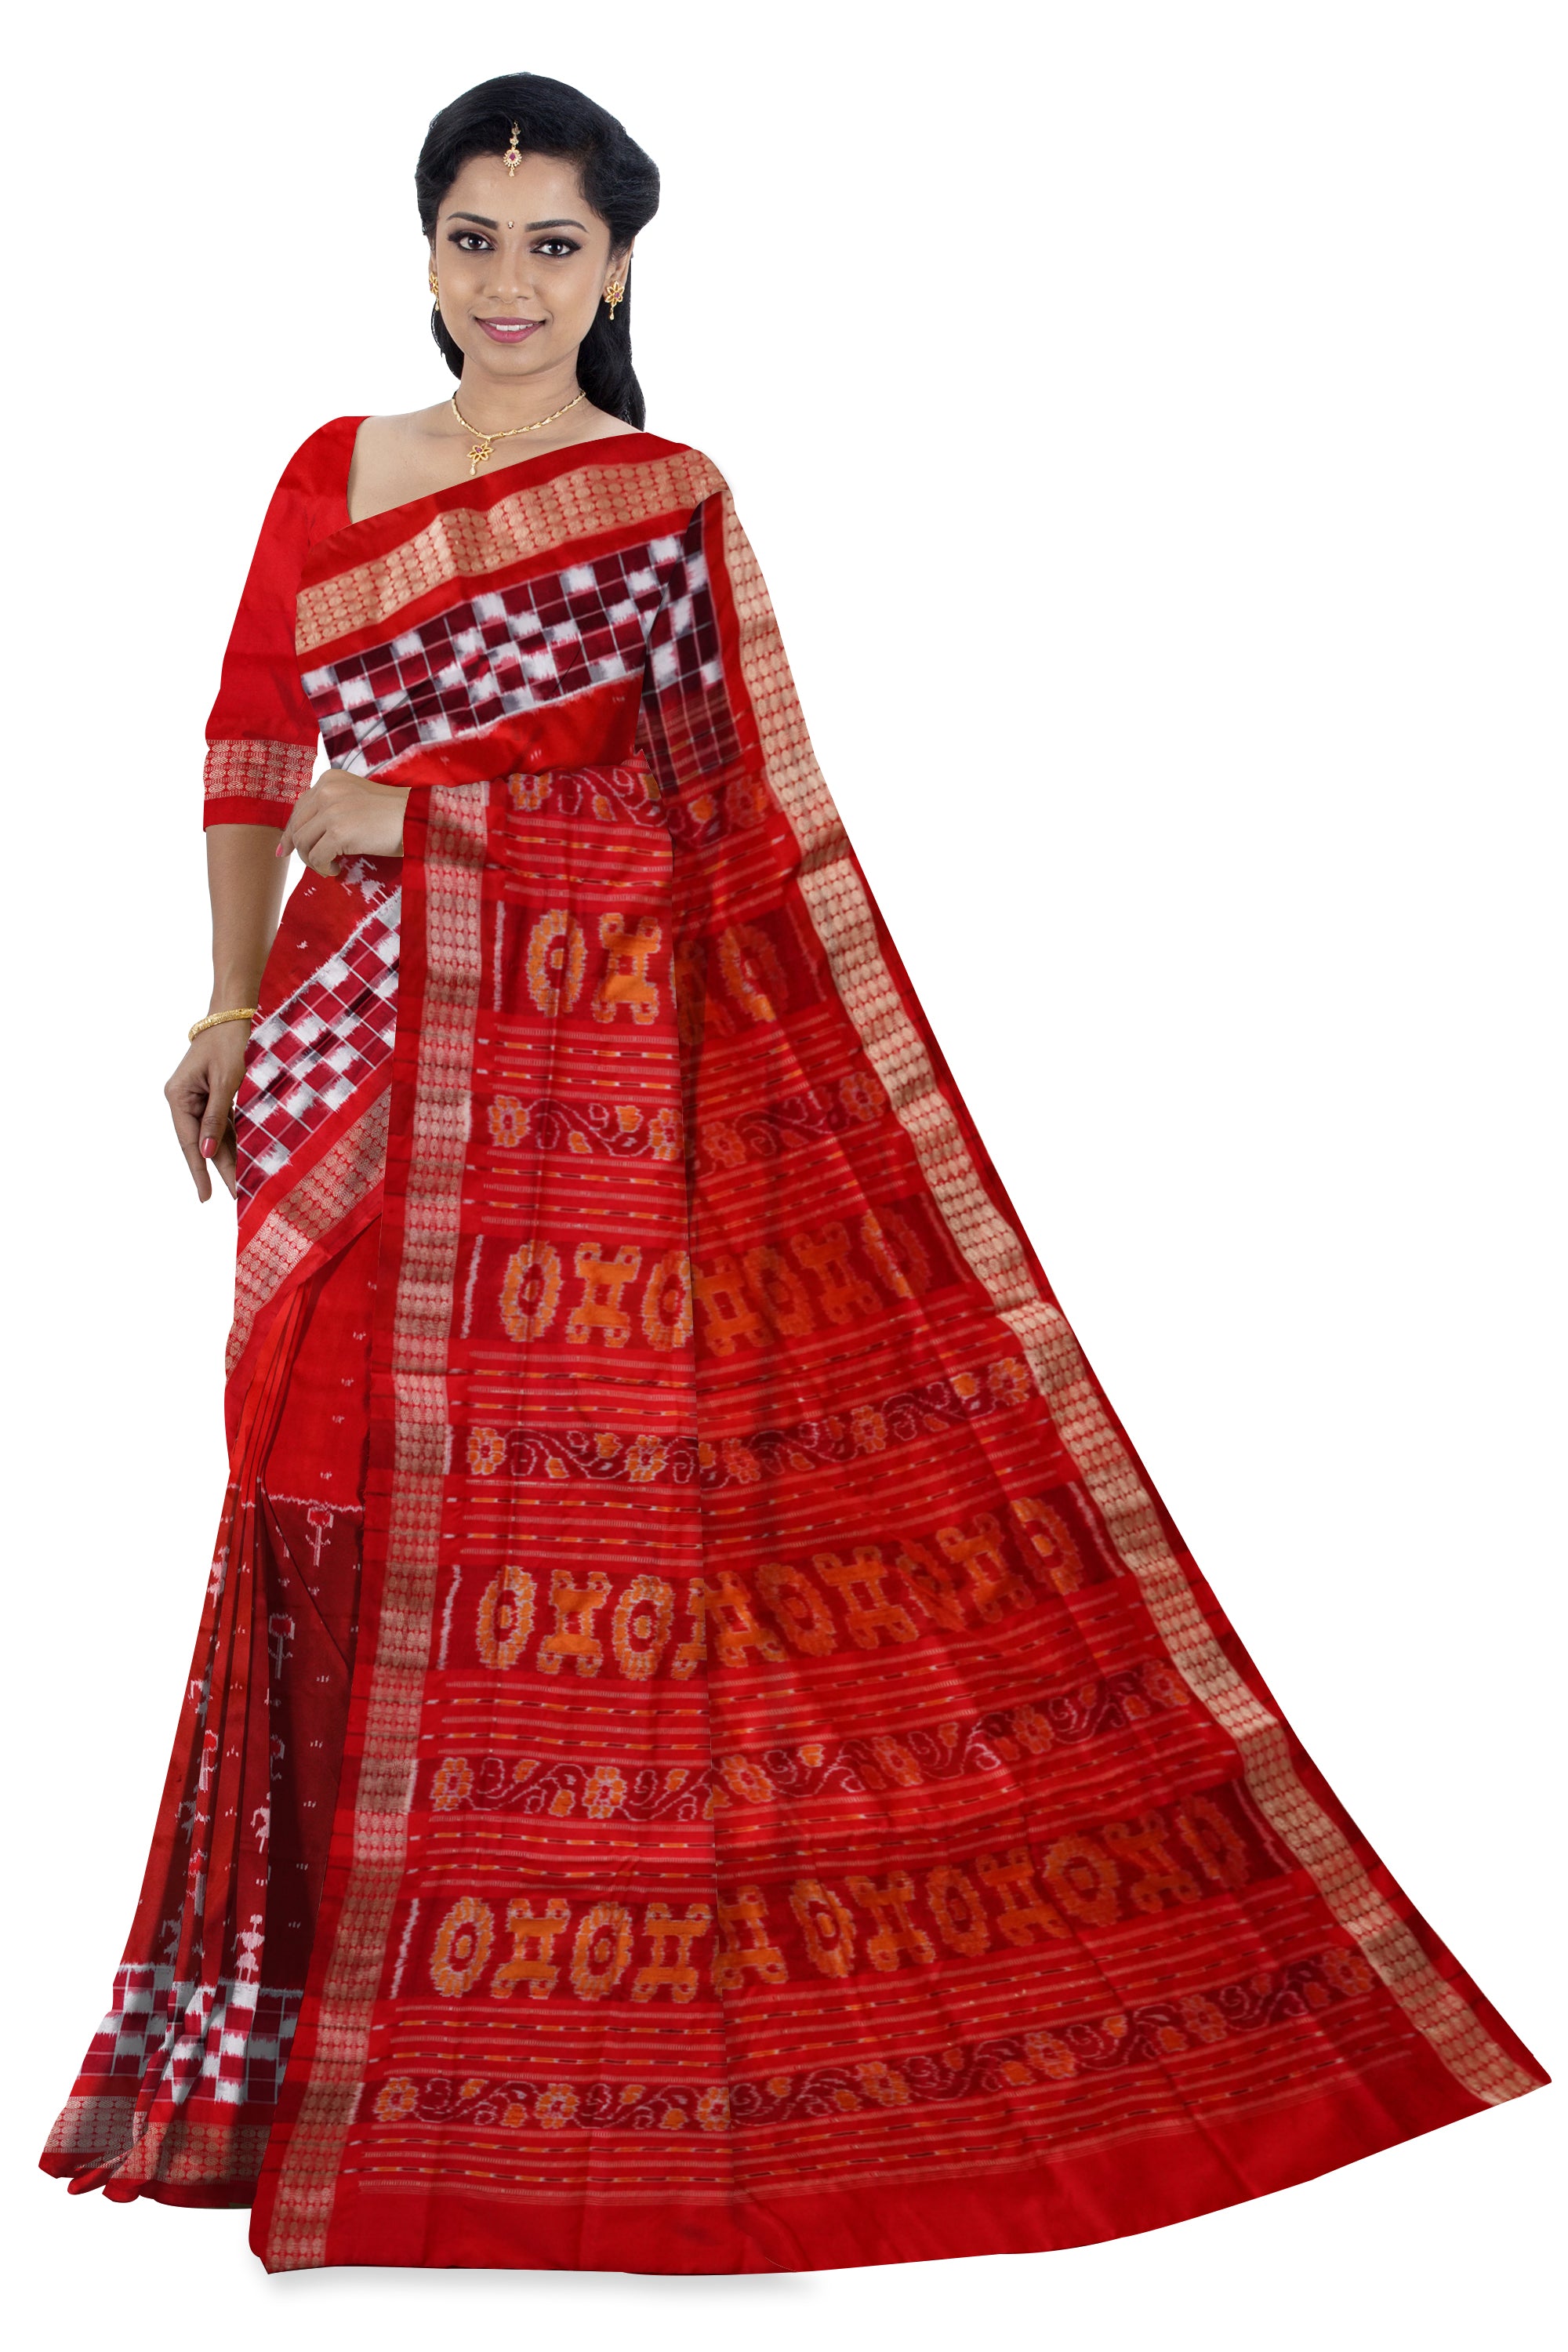 Terracotta Sambalpuri handloom pata saree in red color with Pasapali  border, cultural finesse showcased gracefully. - Koshali Arts & Crafts Enterprise